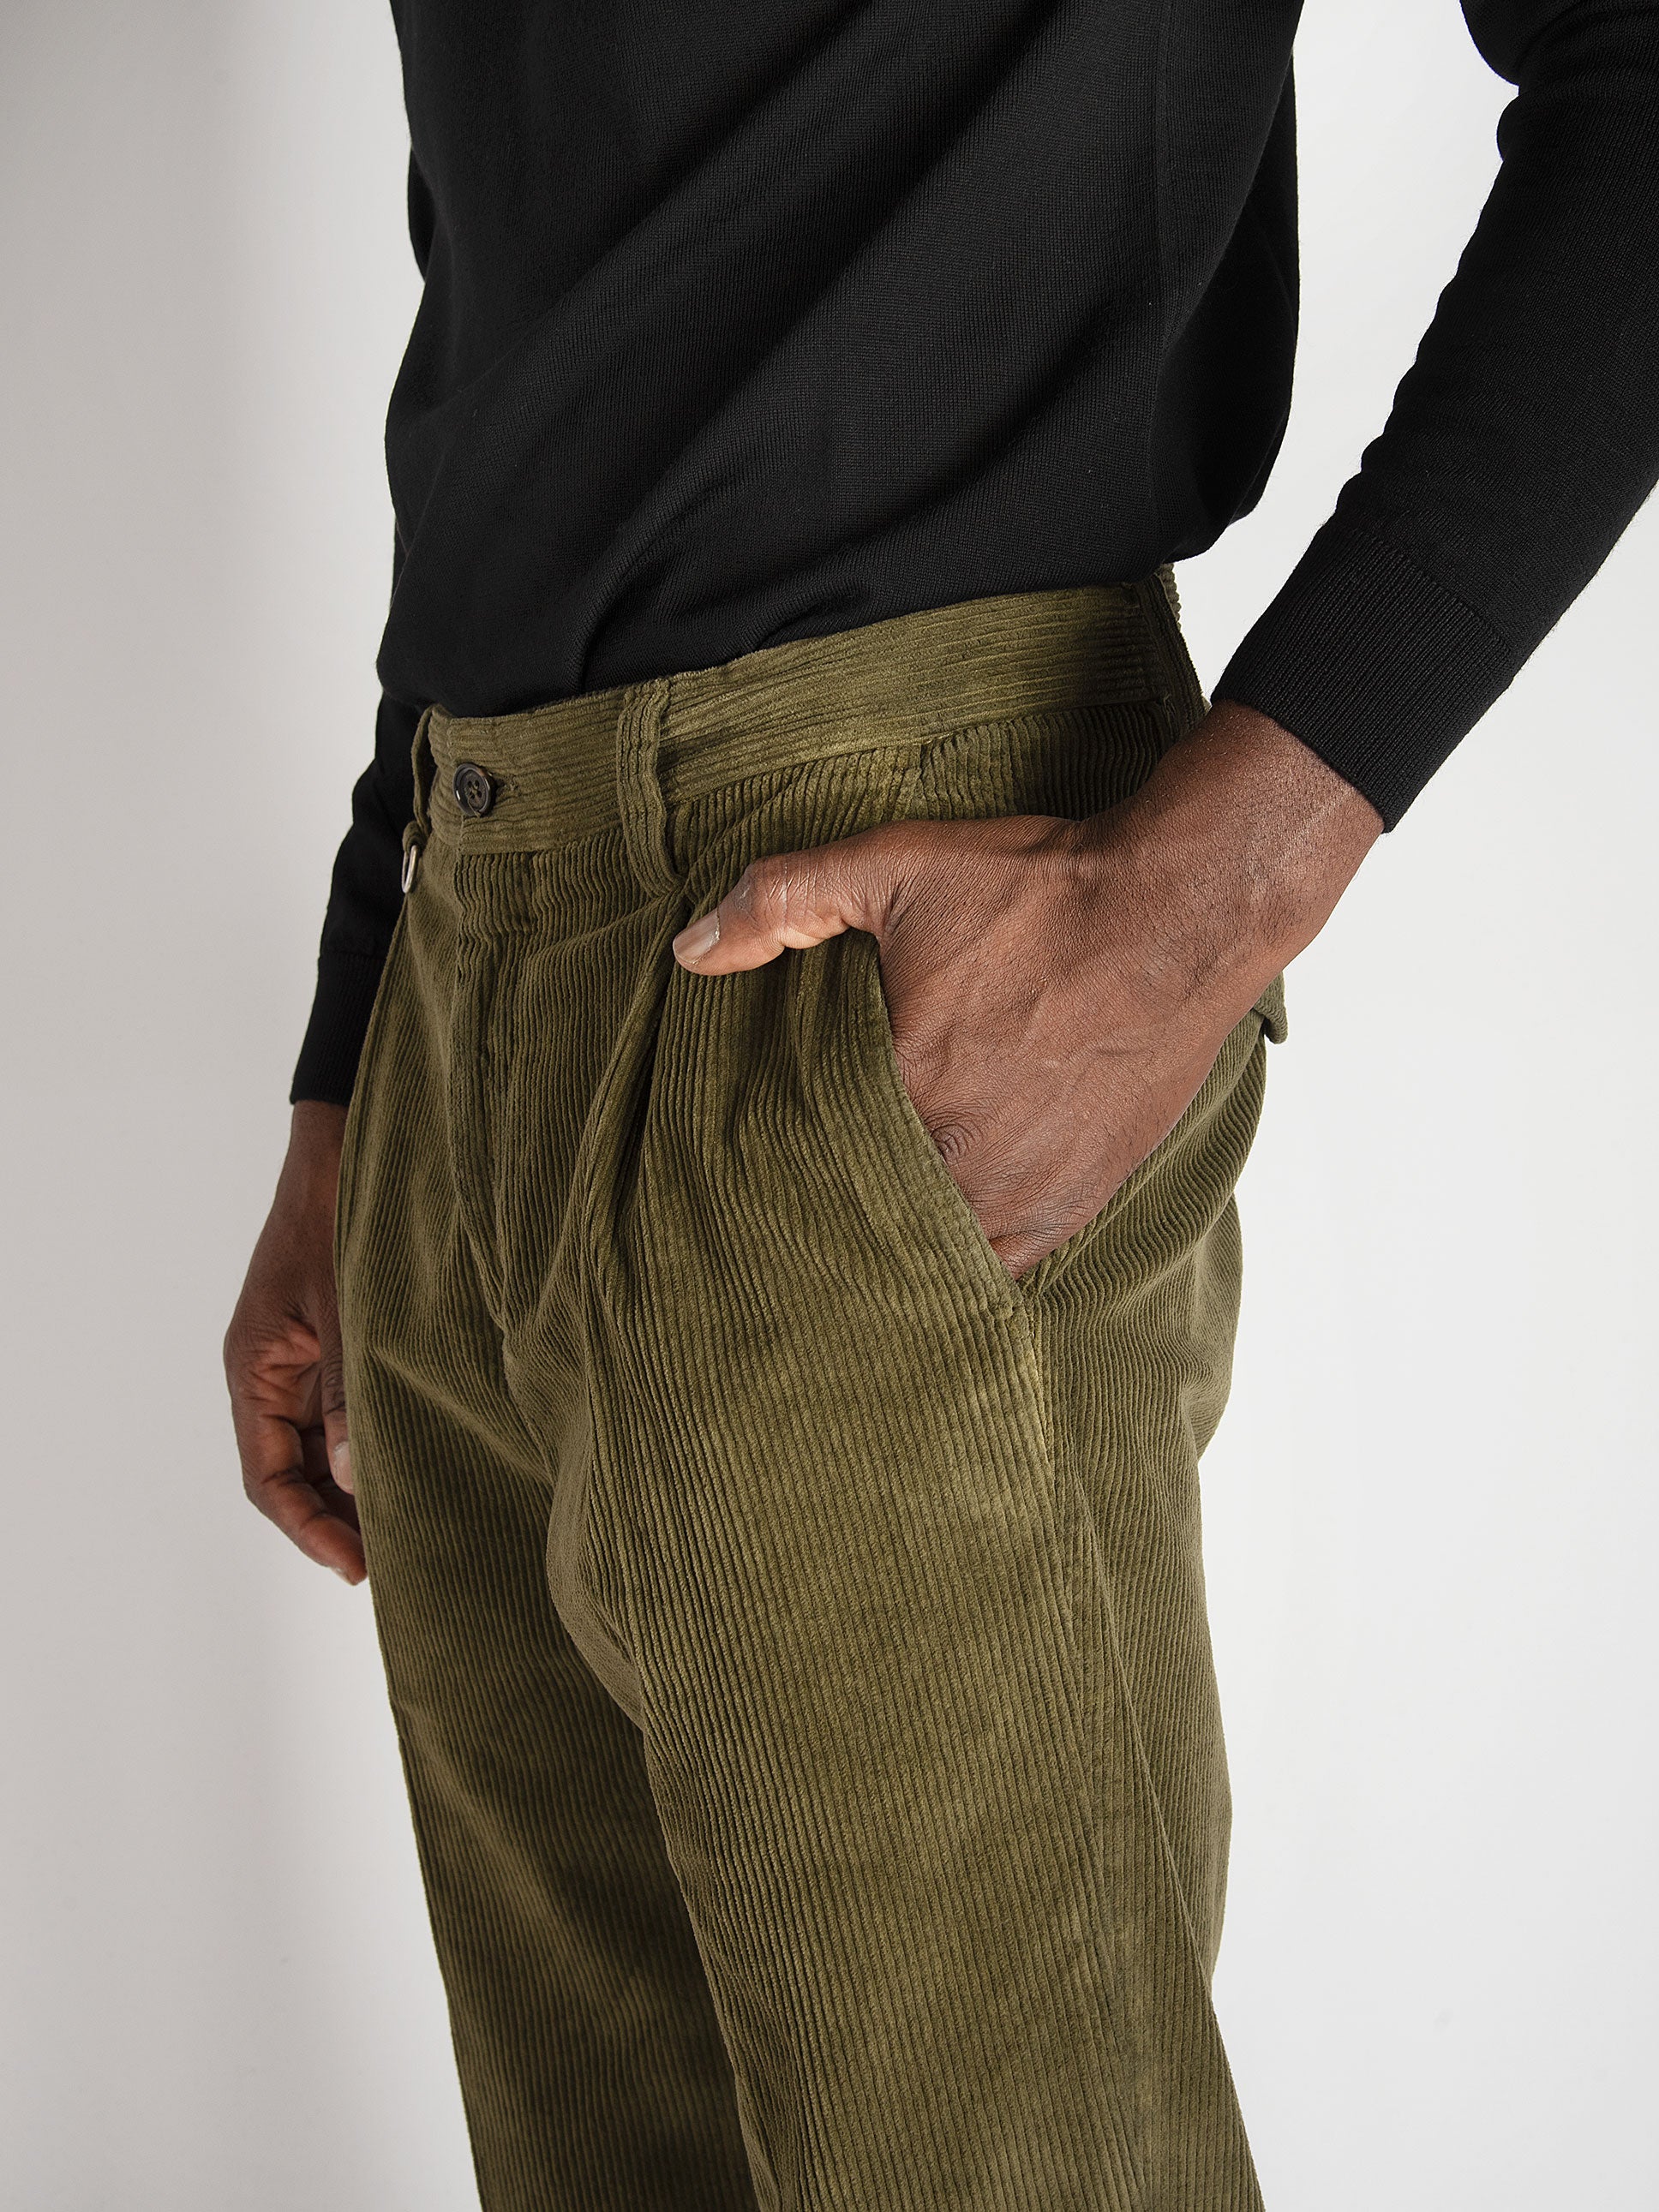 Pantalone Velluto Pences - Verde Militare